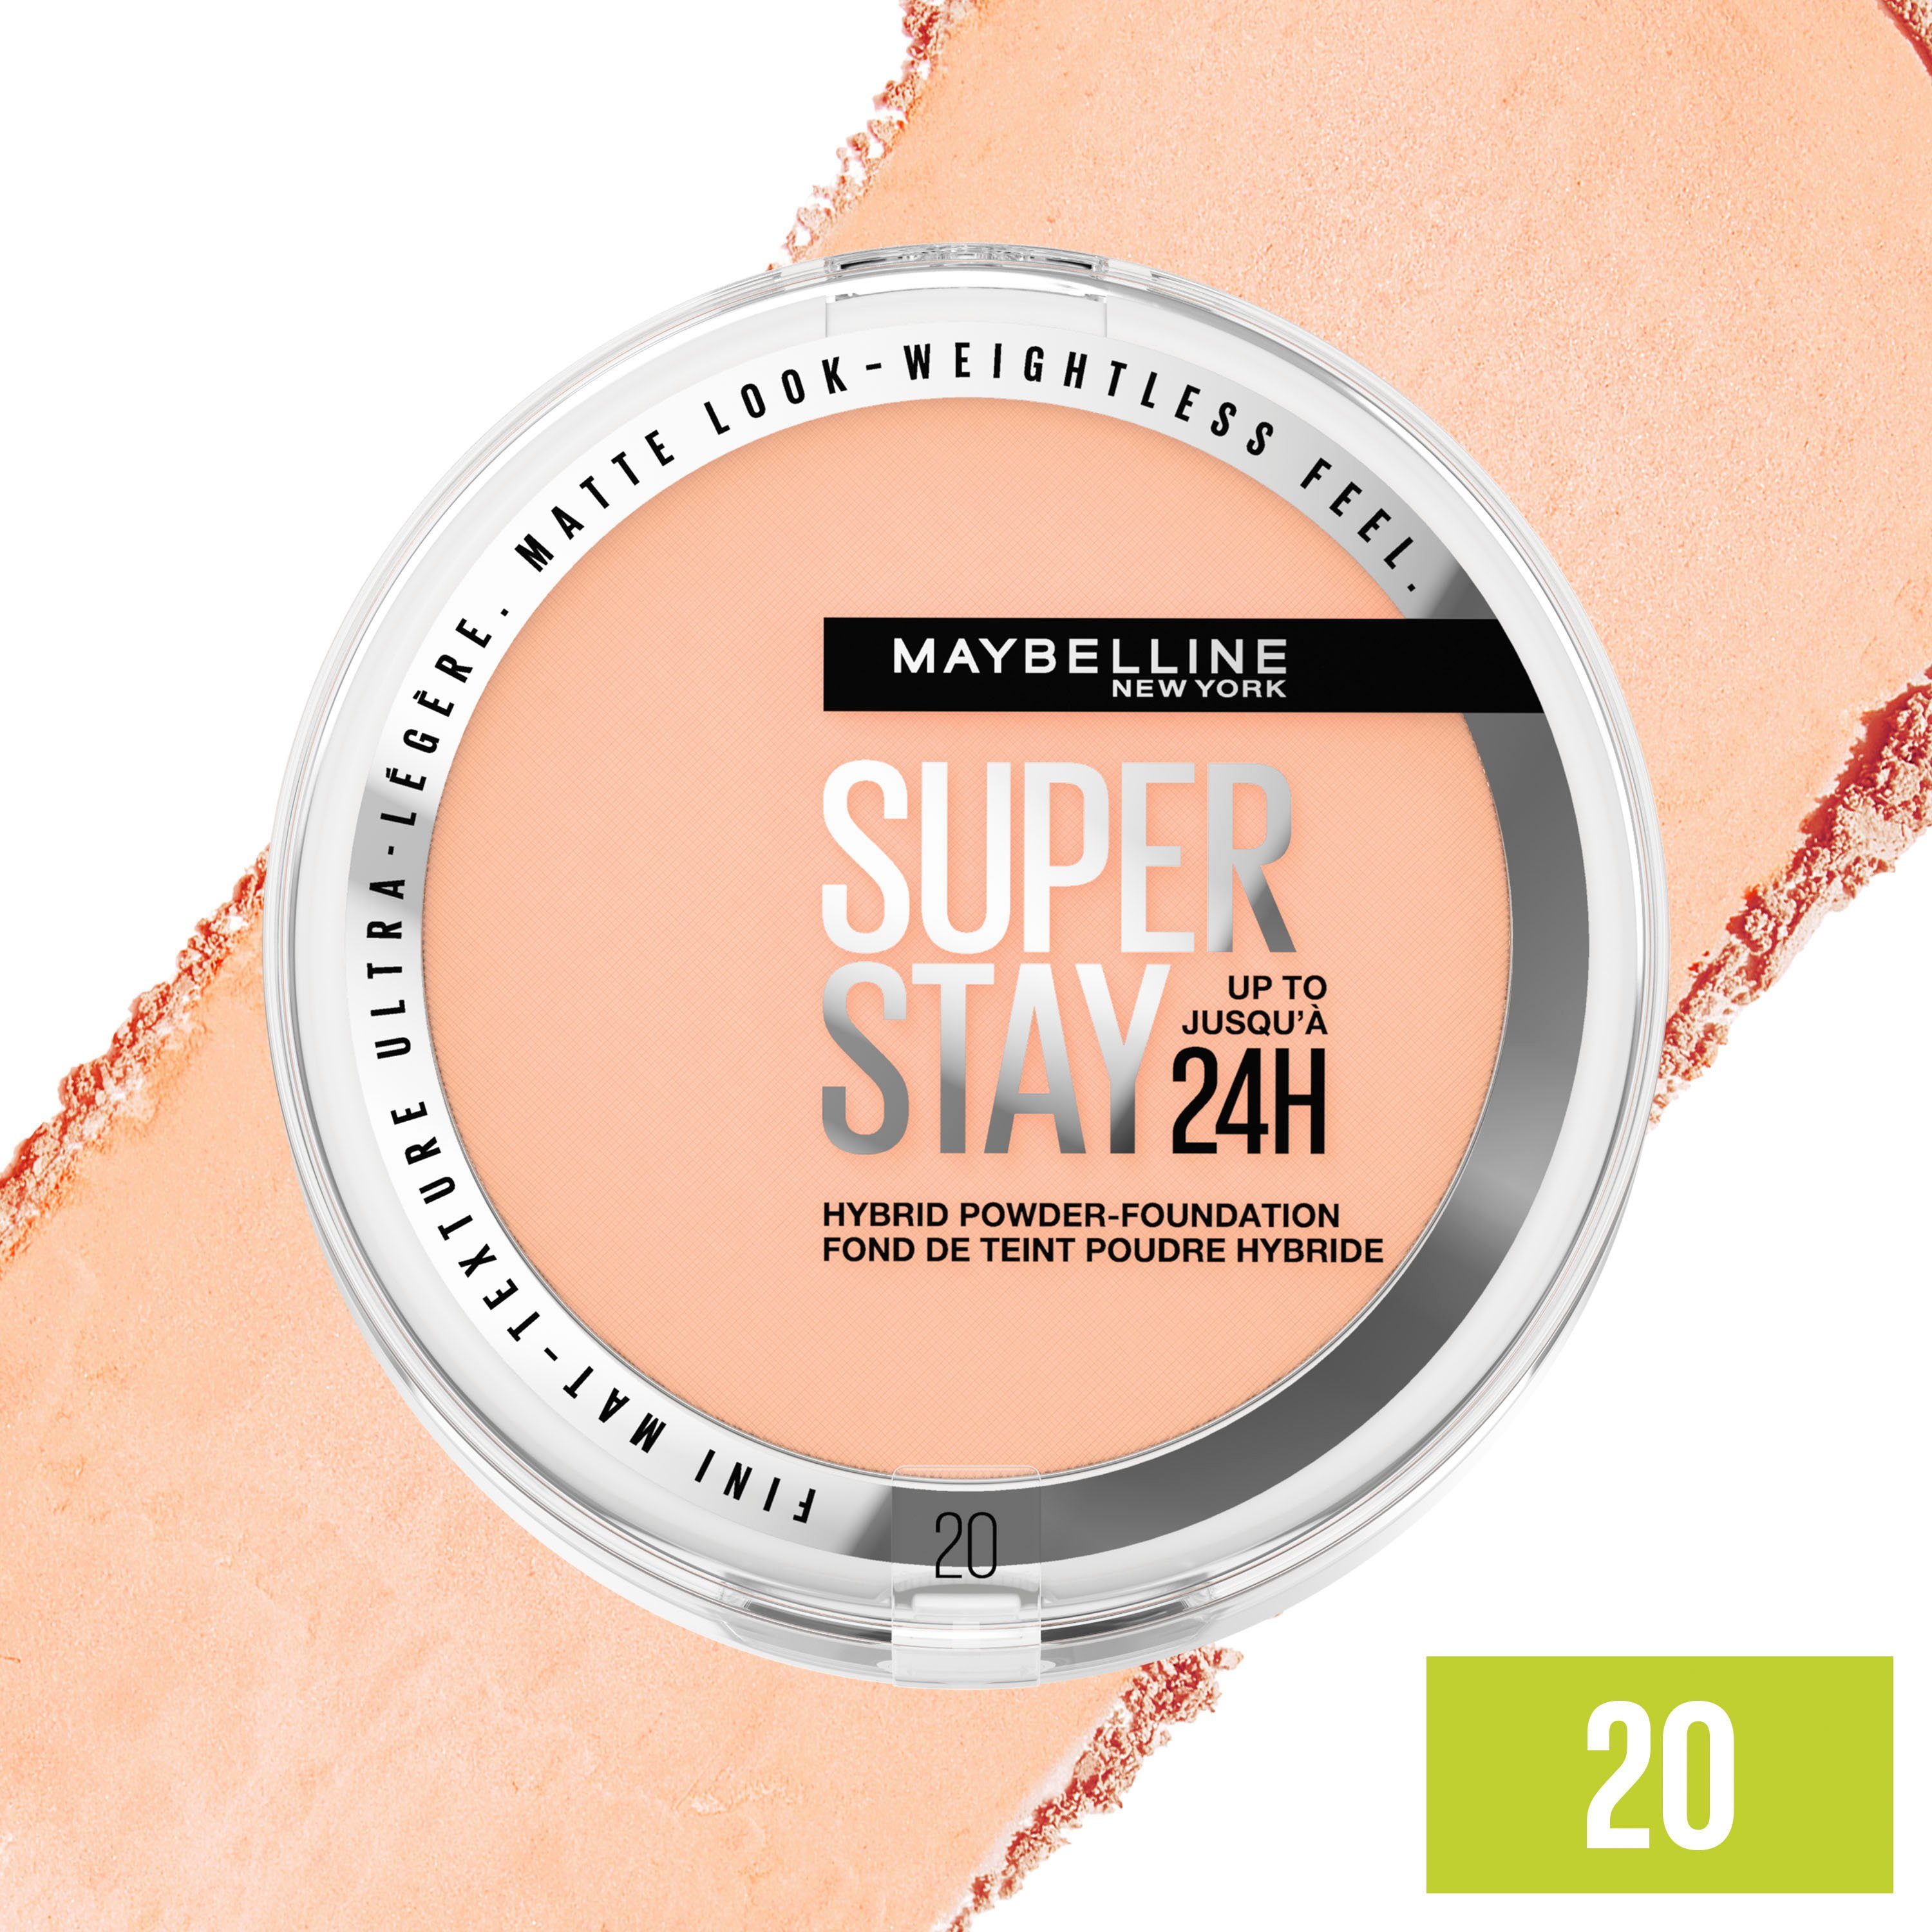 YORK York MAYBELLINE Super Foundation NEW Hybrides New Maybelline Puder Make-Up Stay